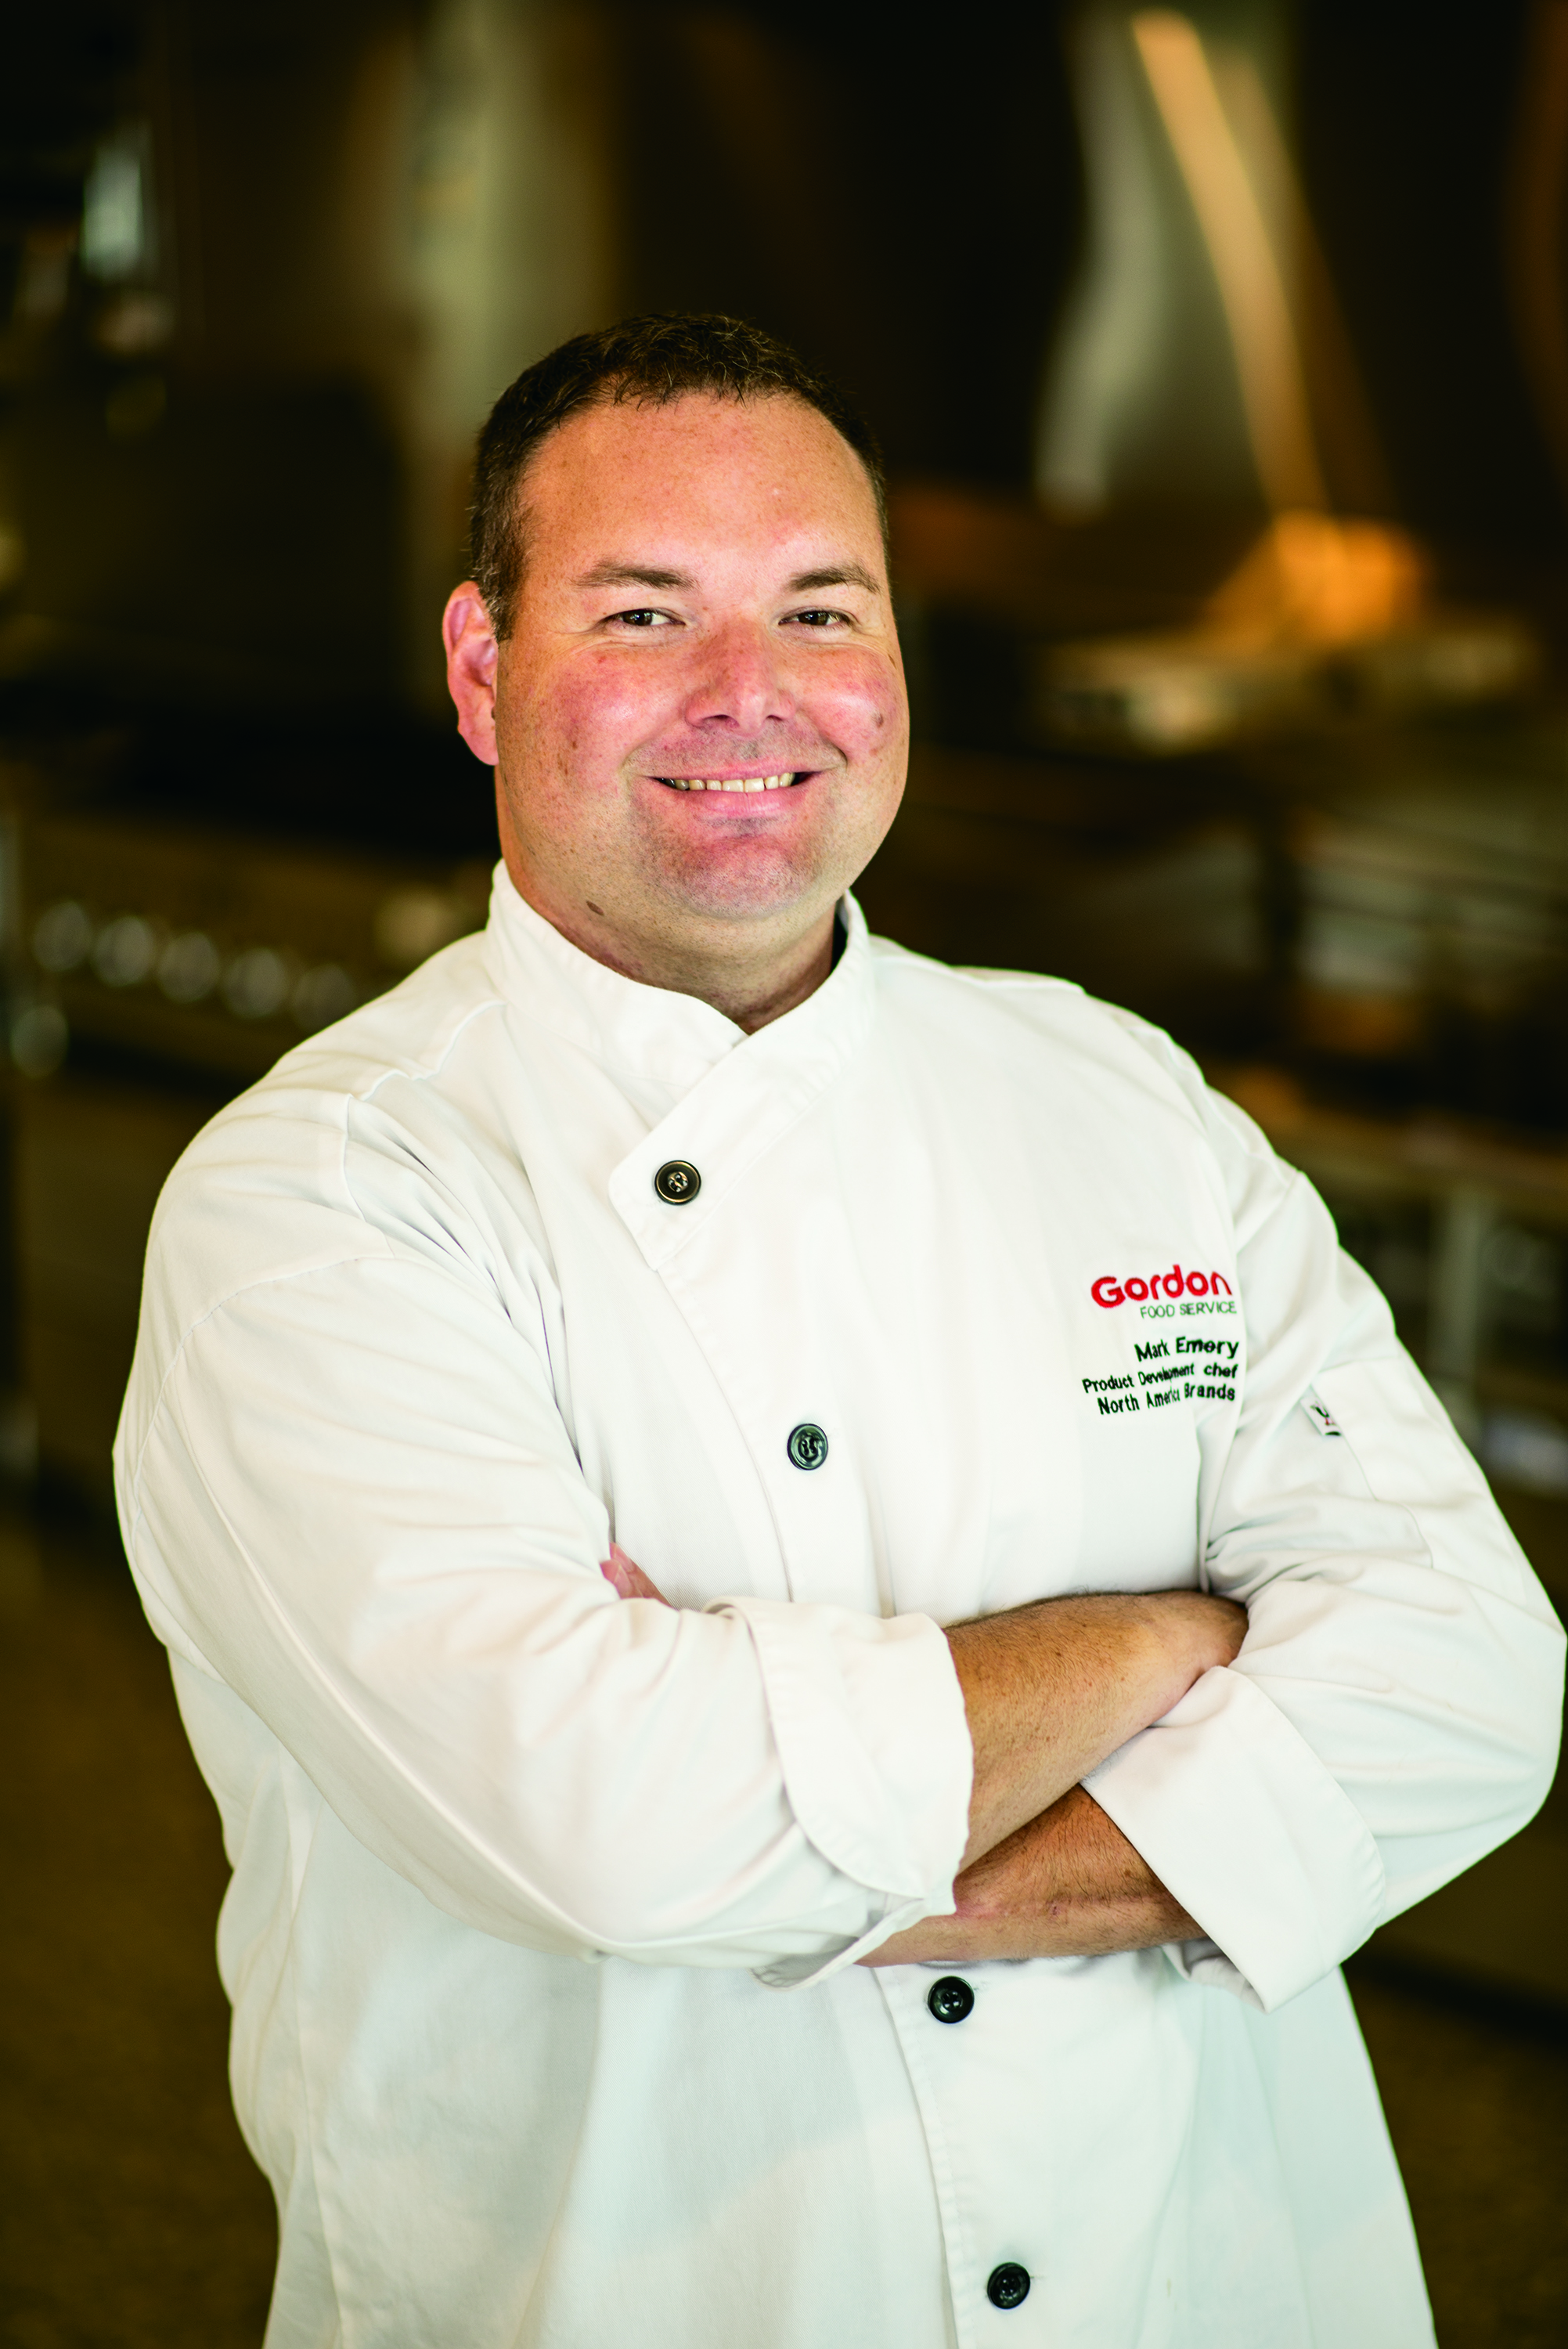 Mark Emery, Product Development Chef - North America
Gordon Food Service